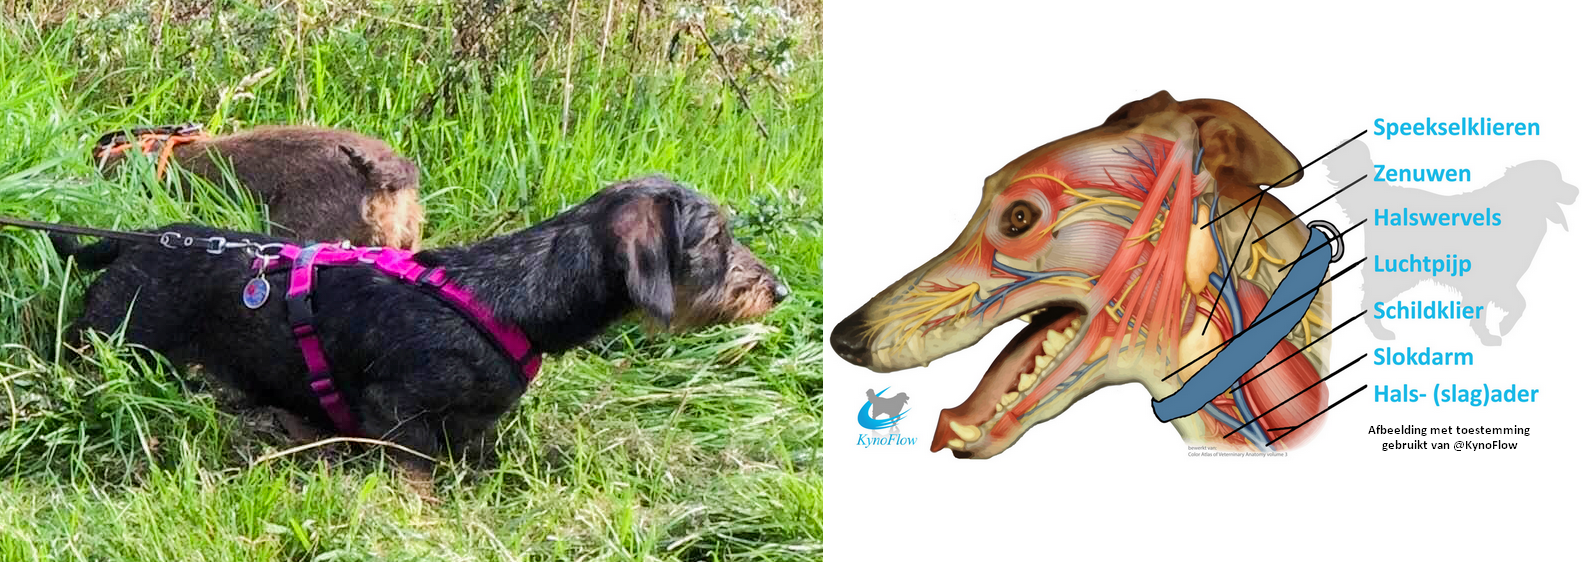 Anatomie nek hond halsband of harnas hondentuig tuig tecel puppy gevolgen